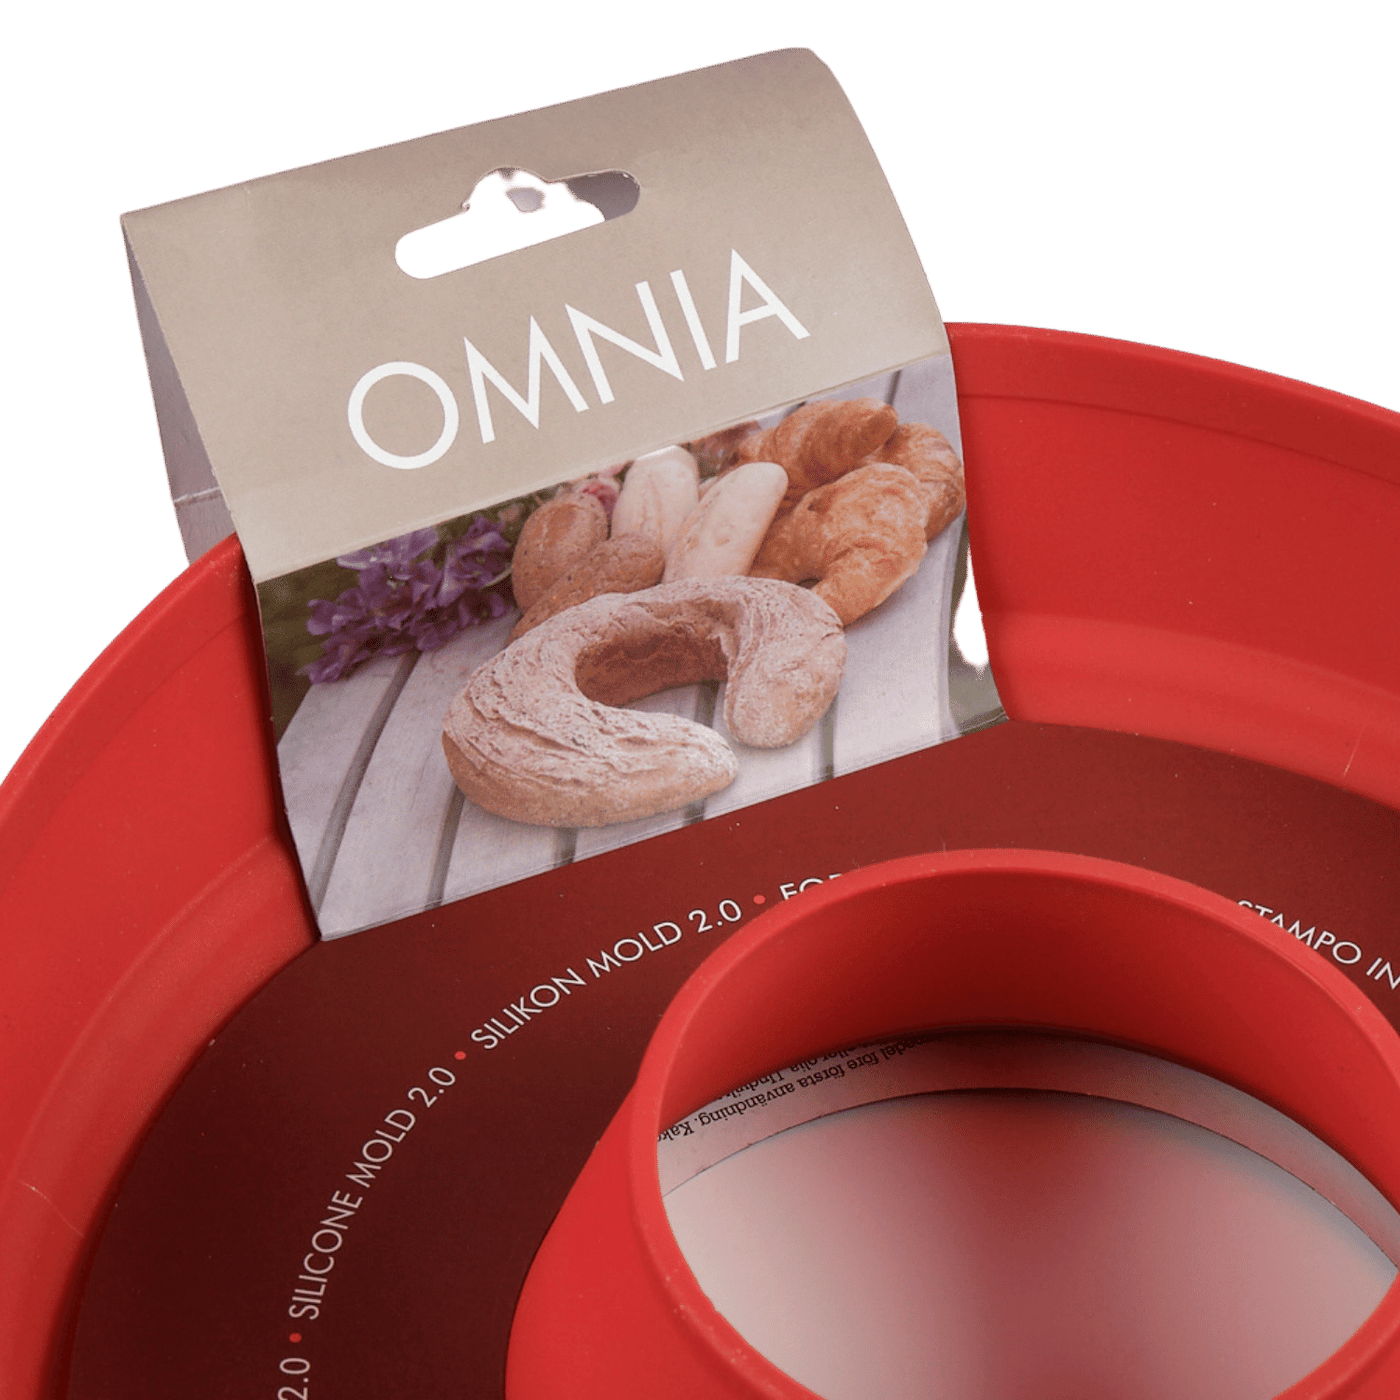 Omnia Oven silicone liner set UK